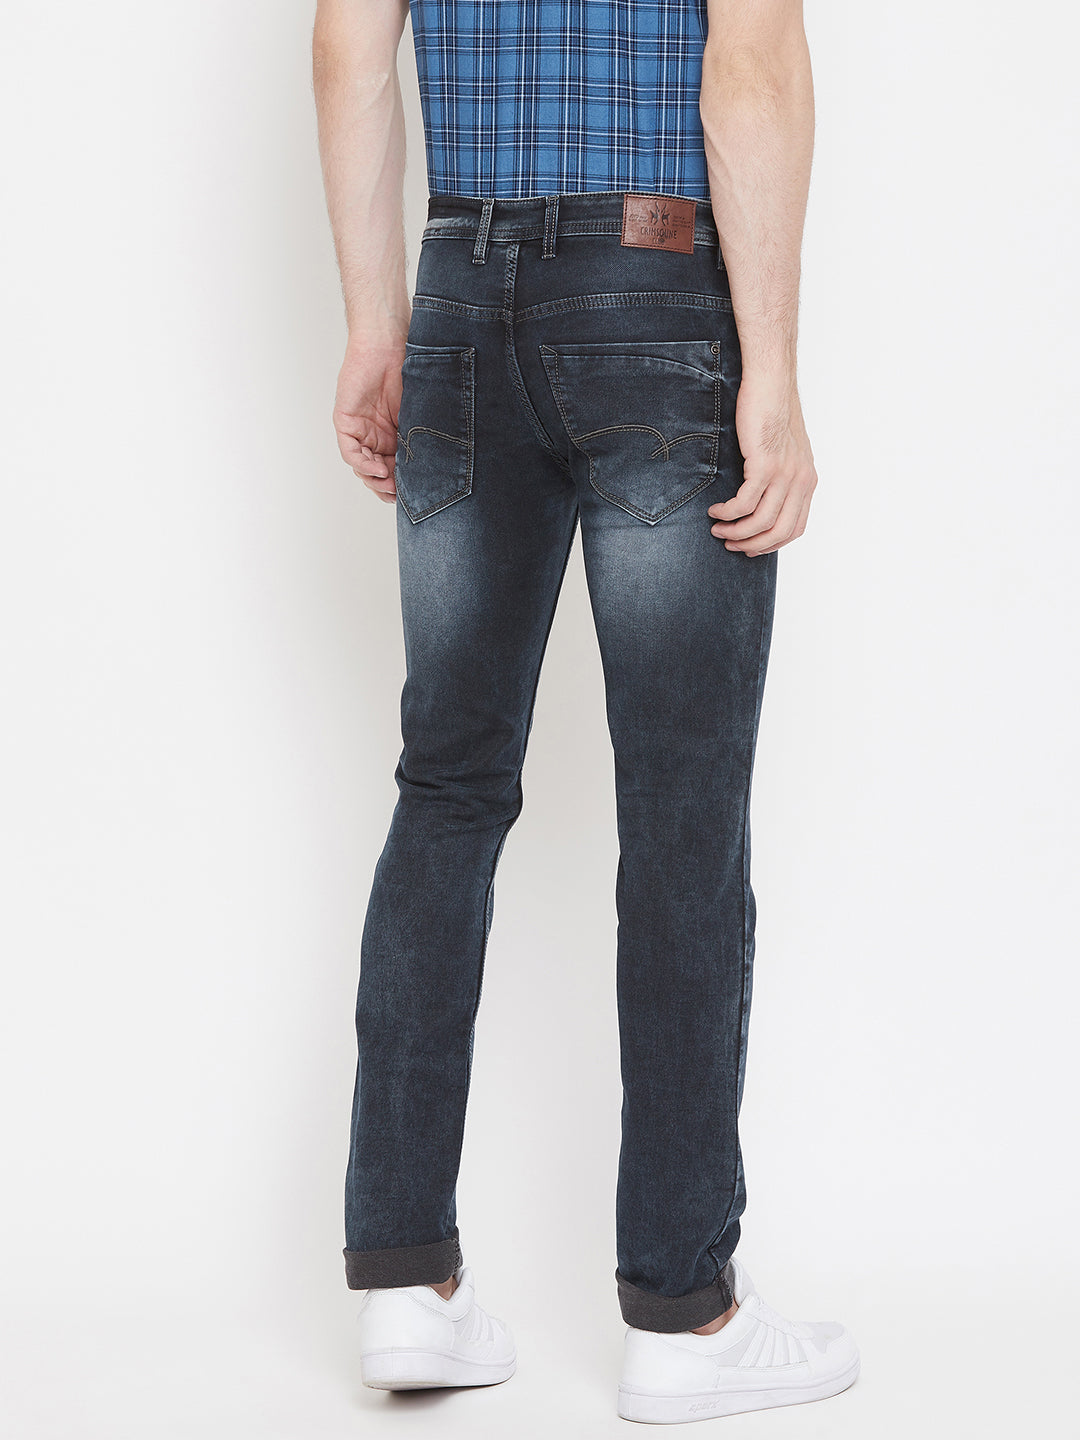 Grey Denim Stonewash Slim Fit Jeans - Men Jeans